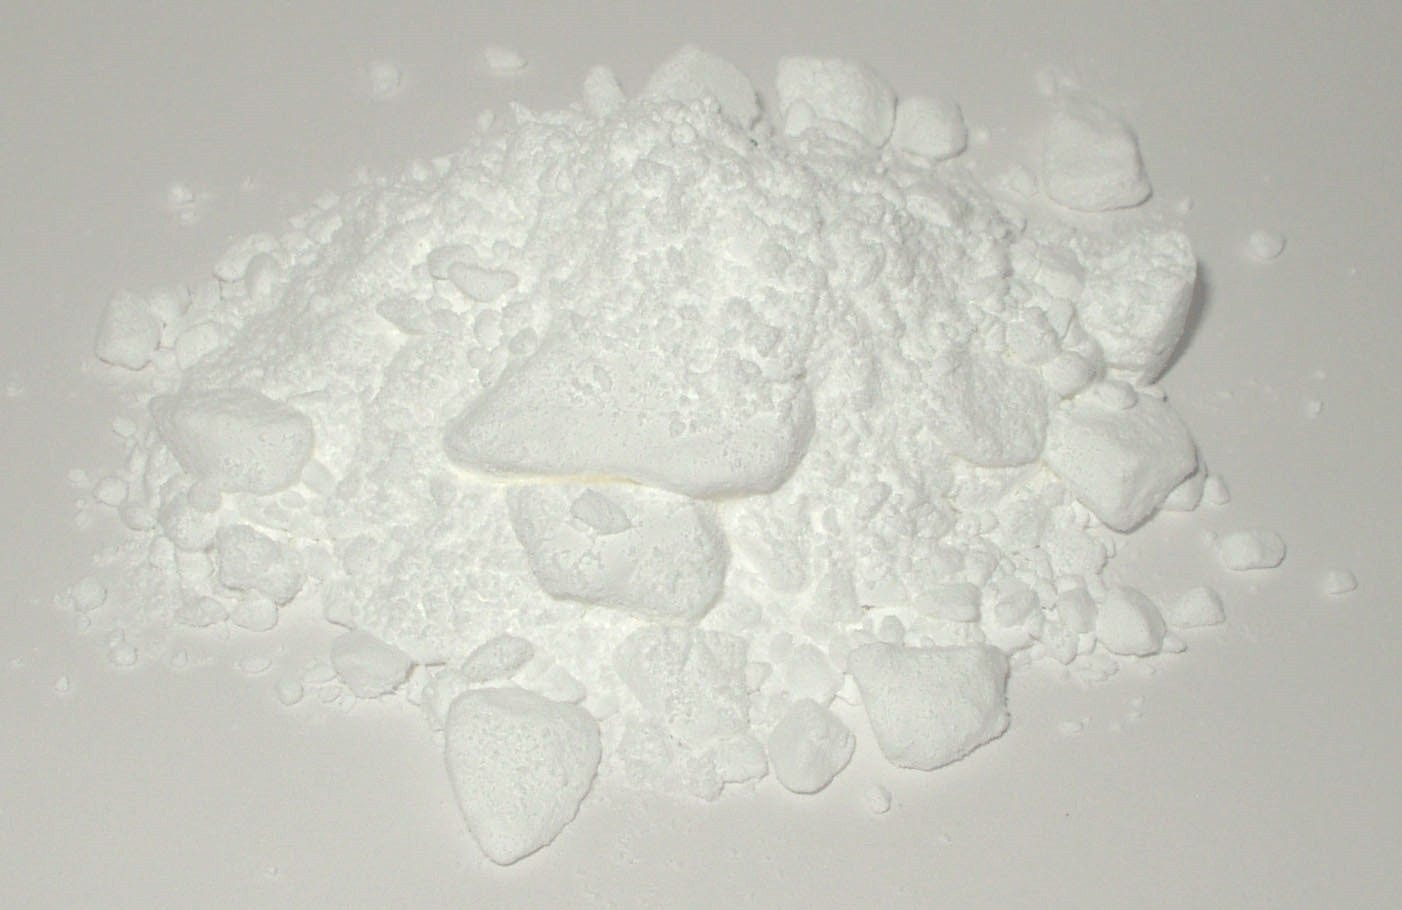 A pile of white powder